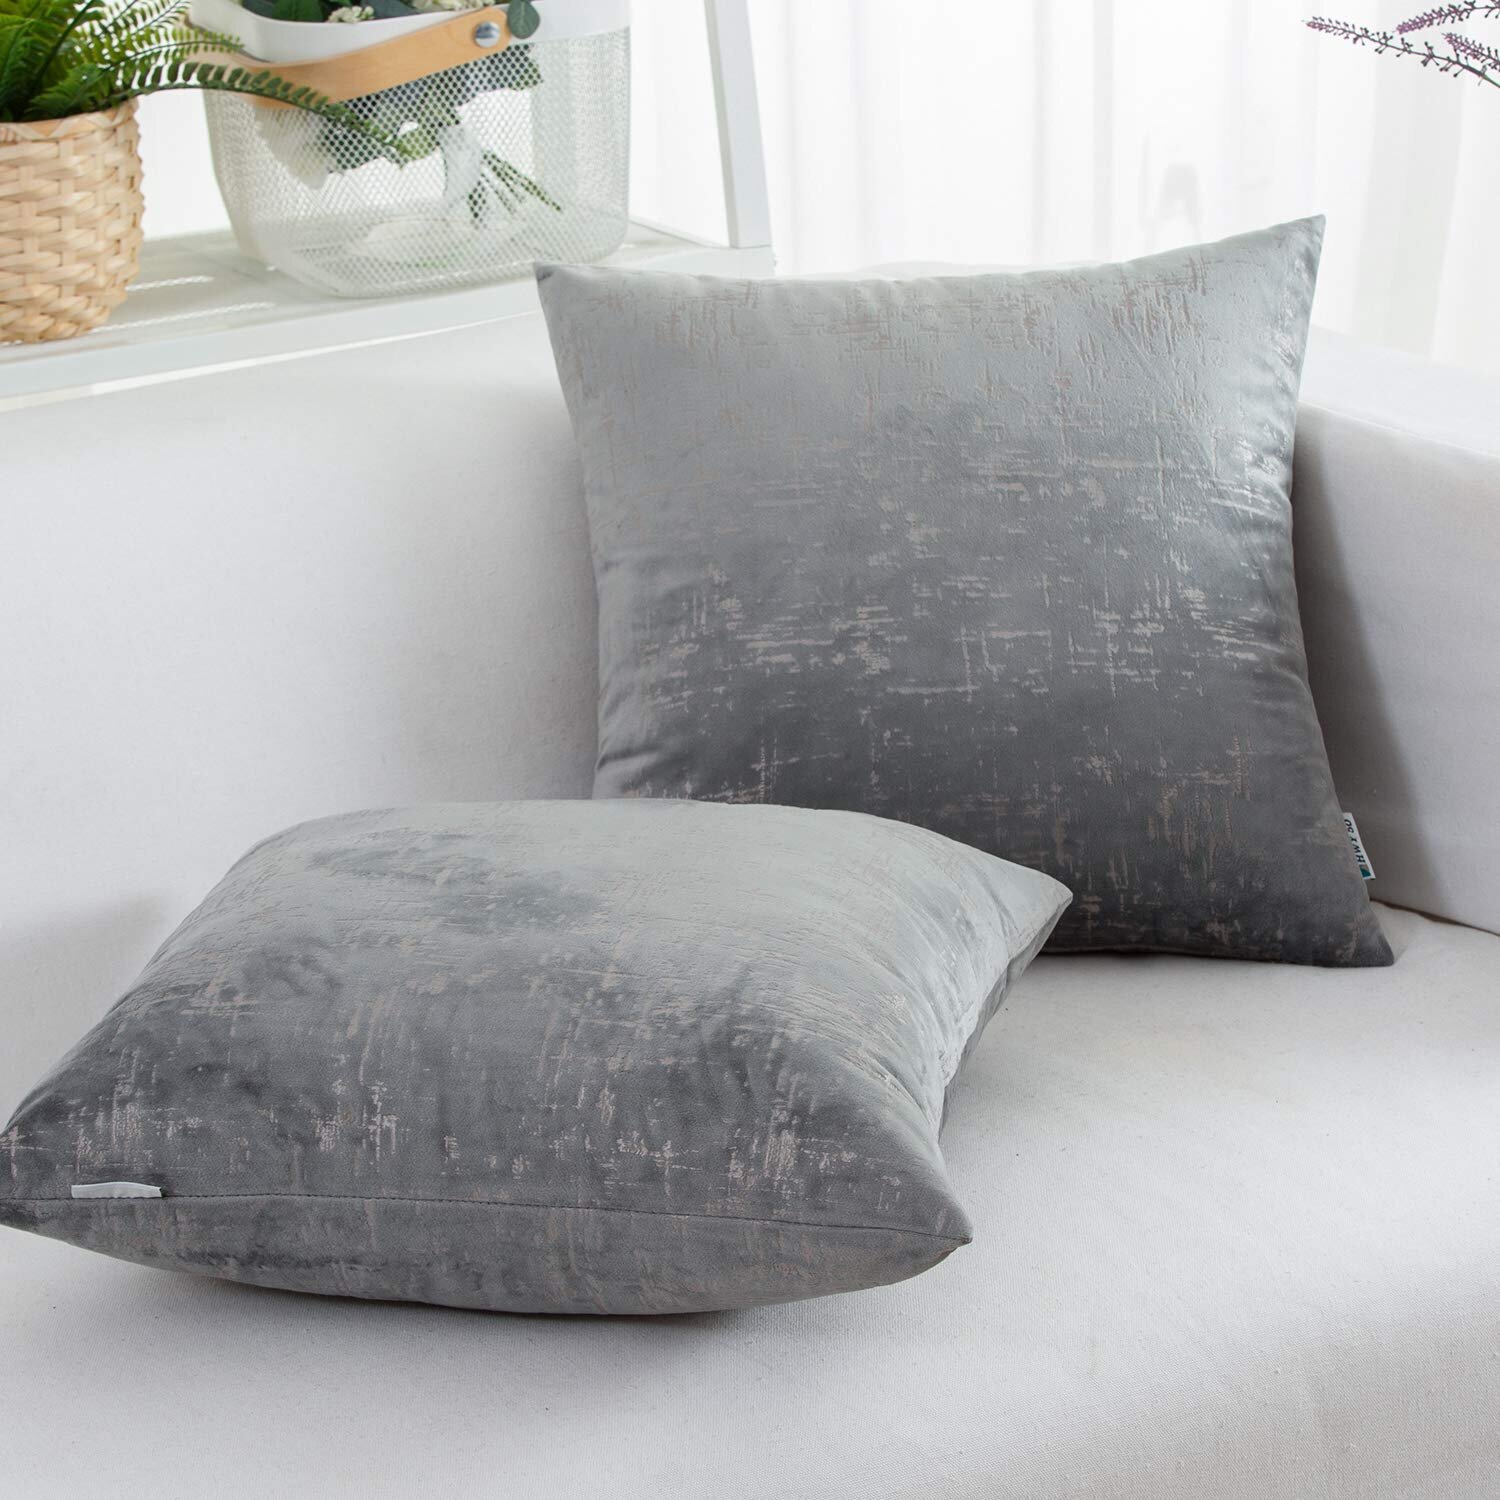 2Pcs Microfiber Square Pillowcases Ultra Soft Pillow Cover Cushion Cover 18"x18" 